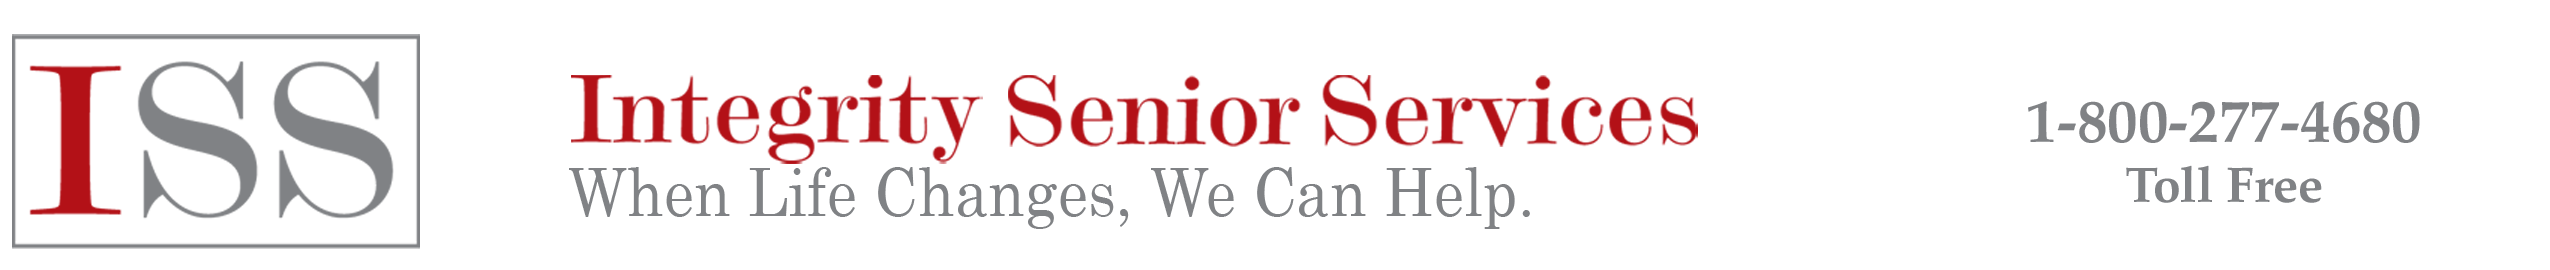 Integrity Senior Services